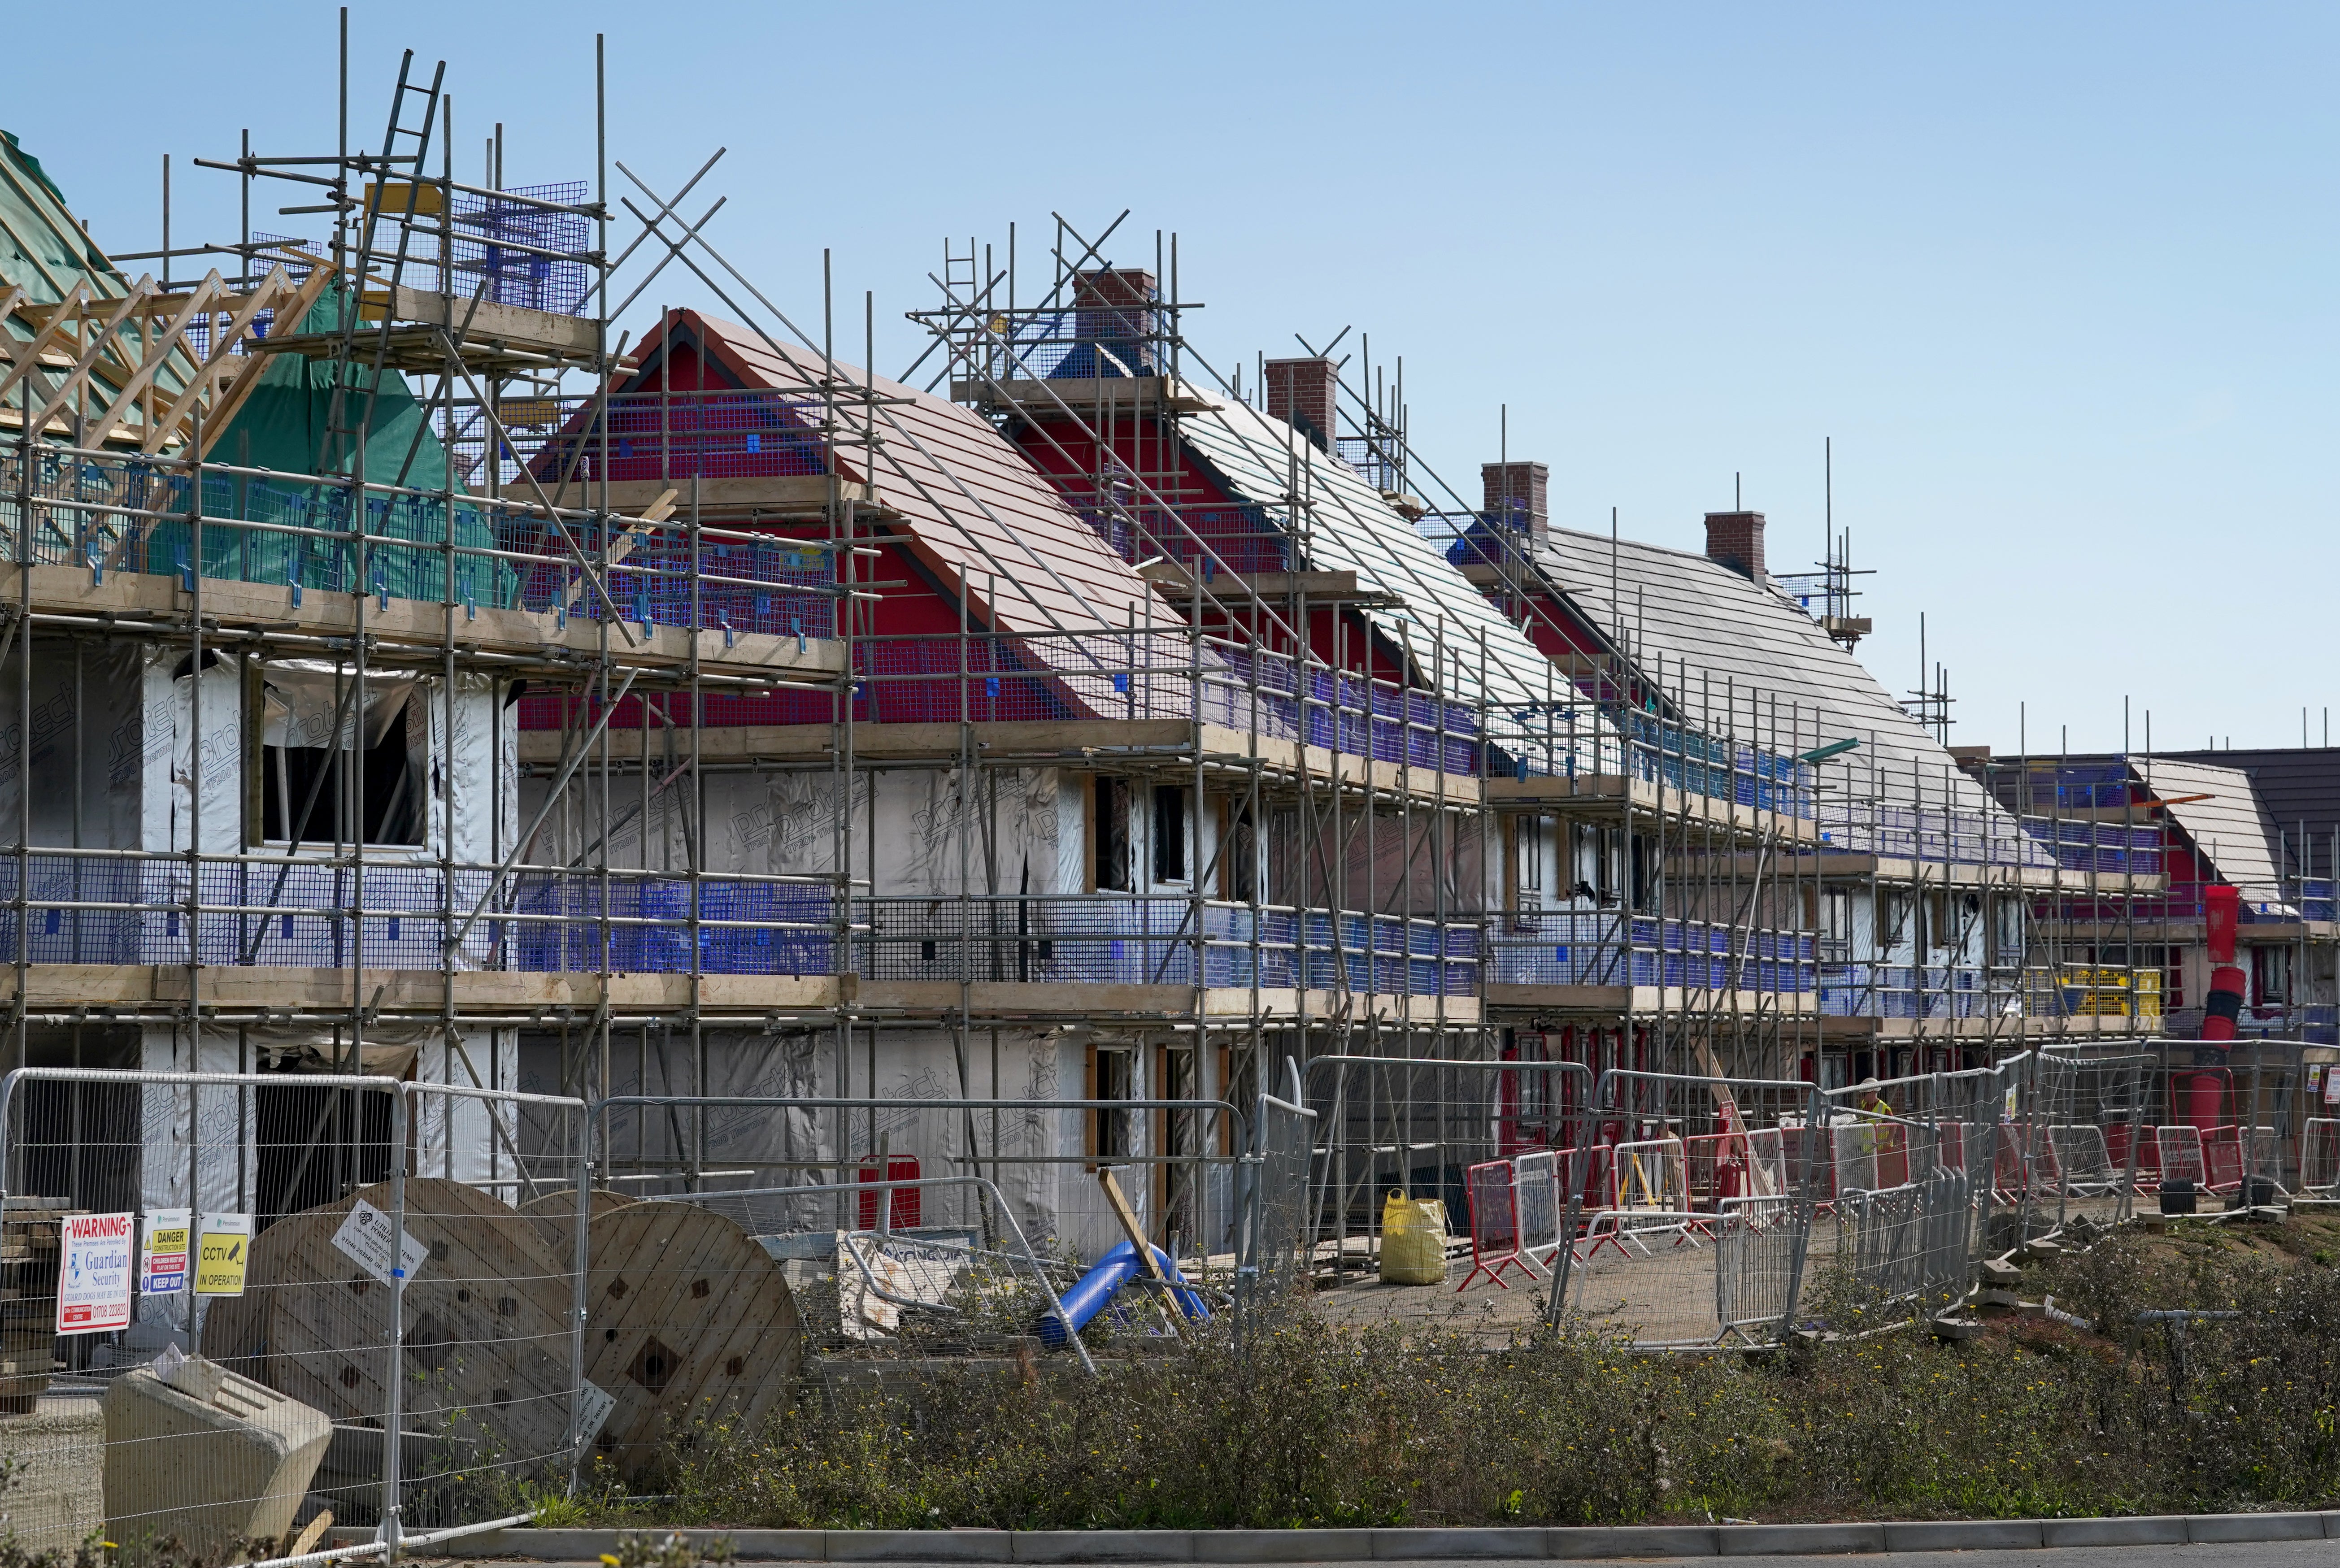 A new housing estate under construction in Ashford, Kent